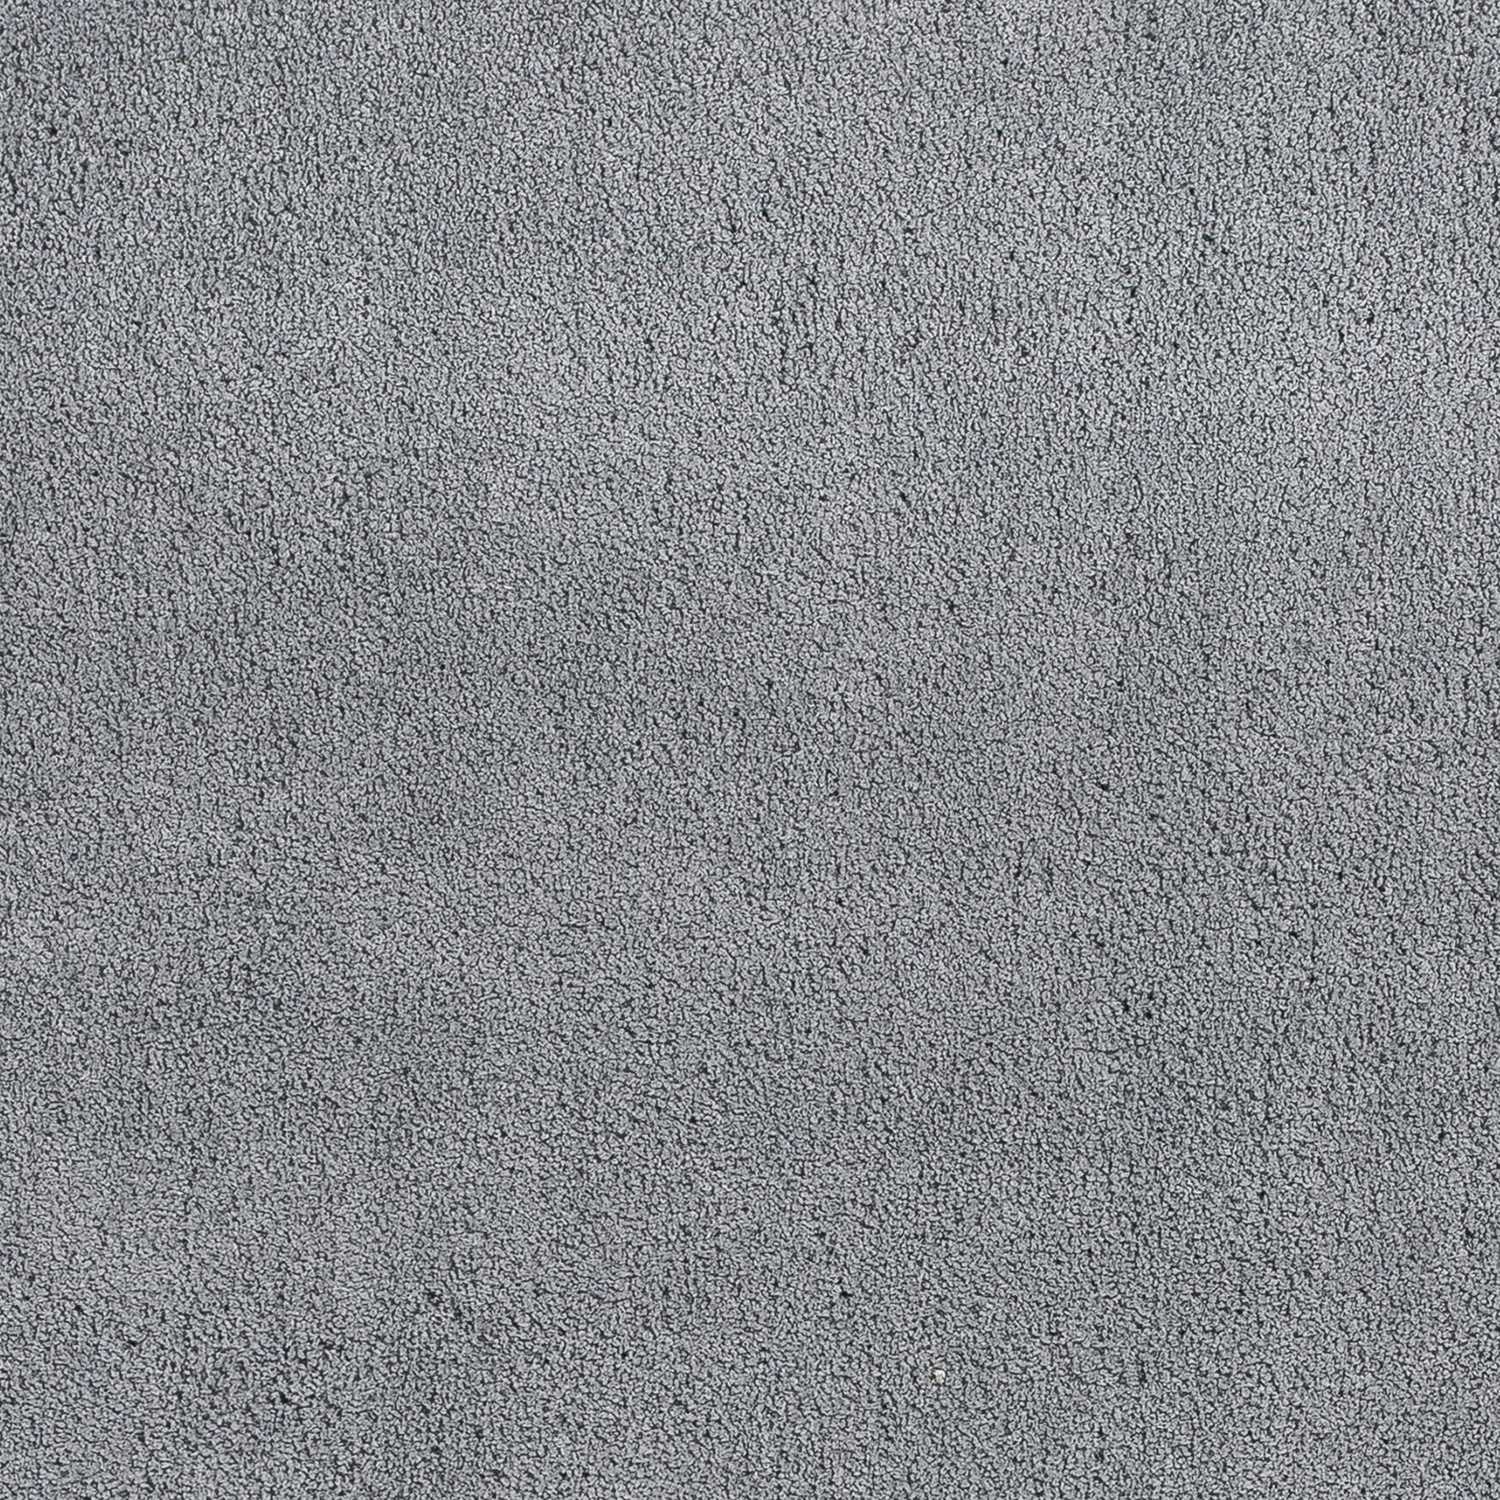 9' x 13' Polyester Grey Area Rug